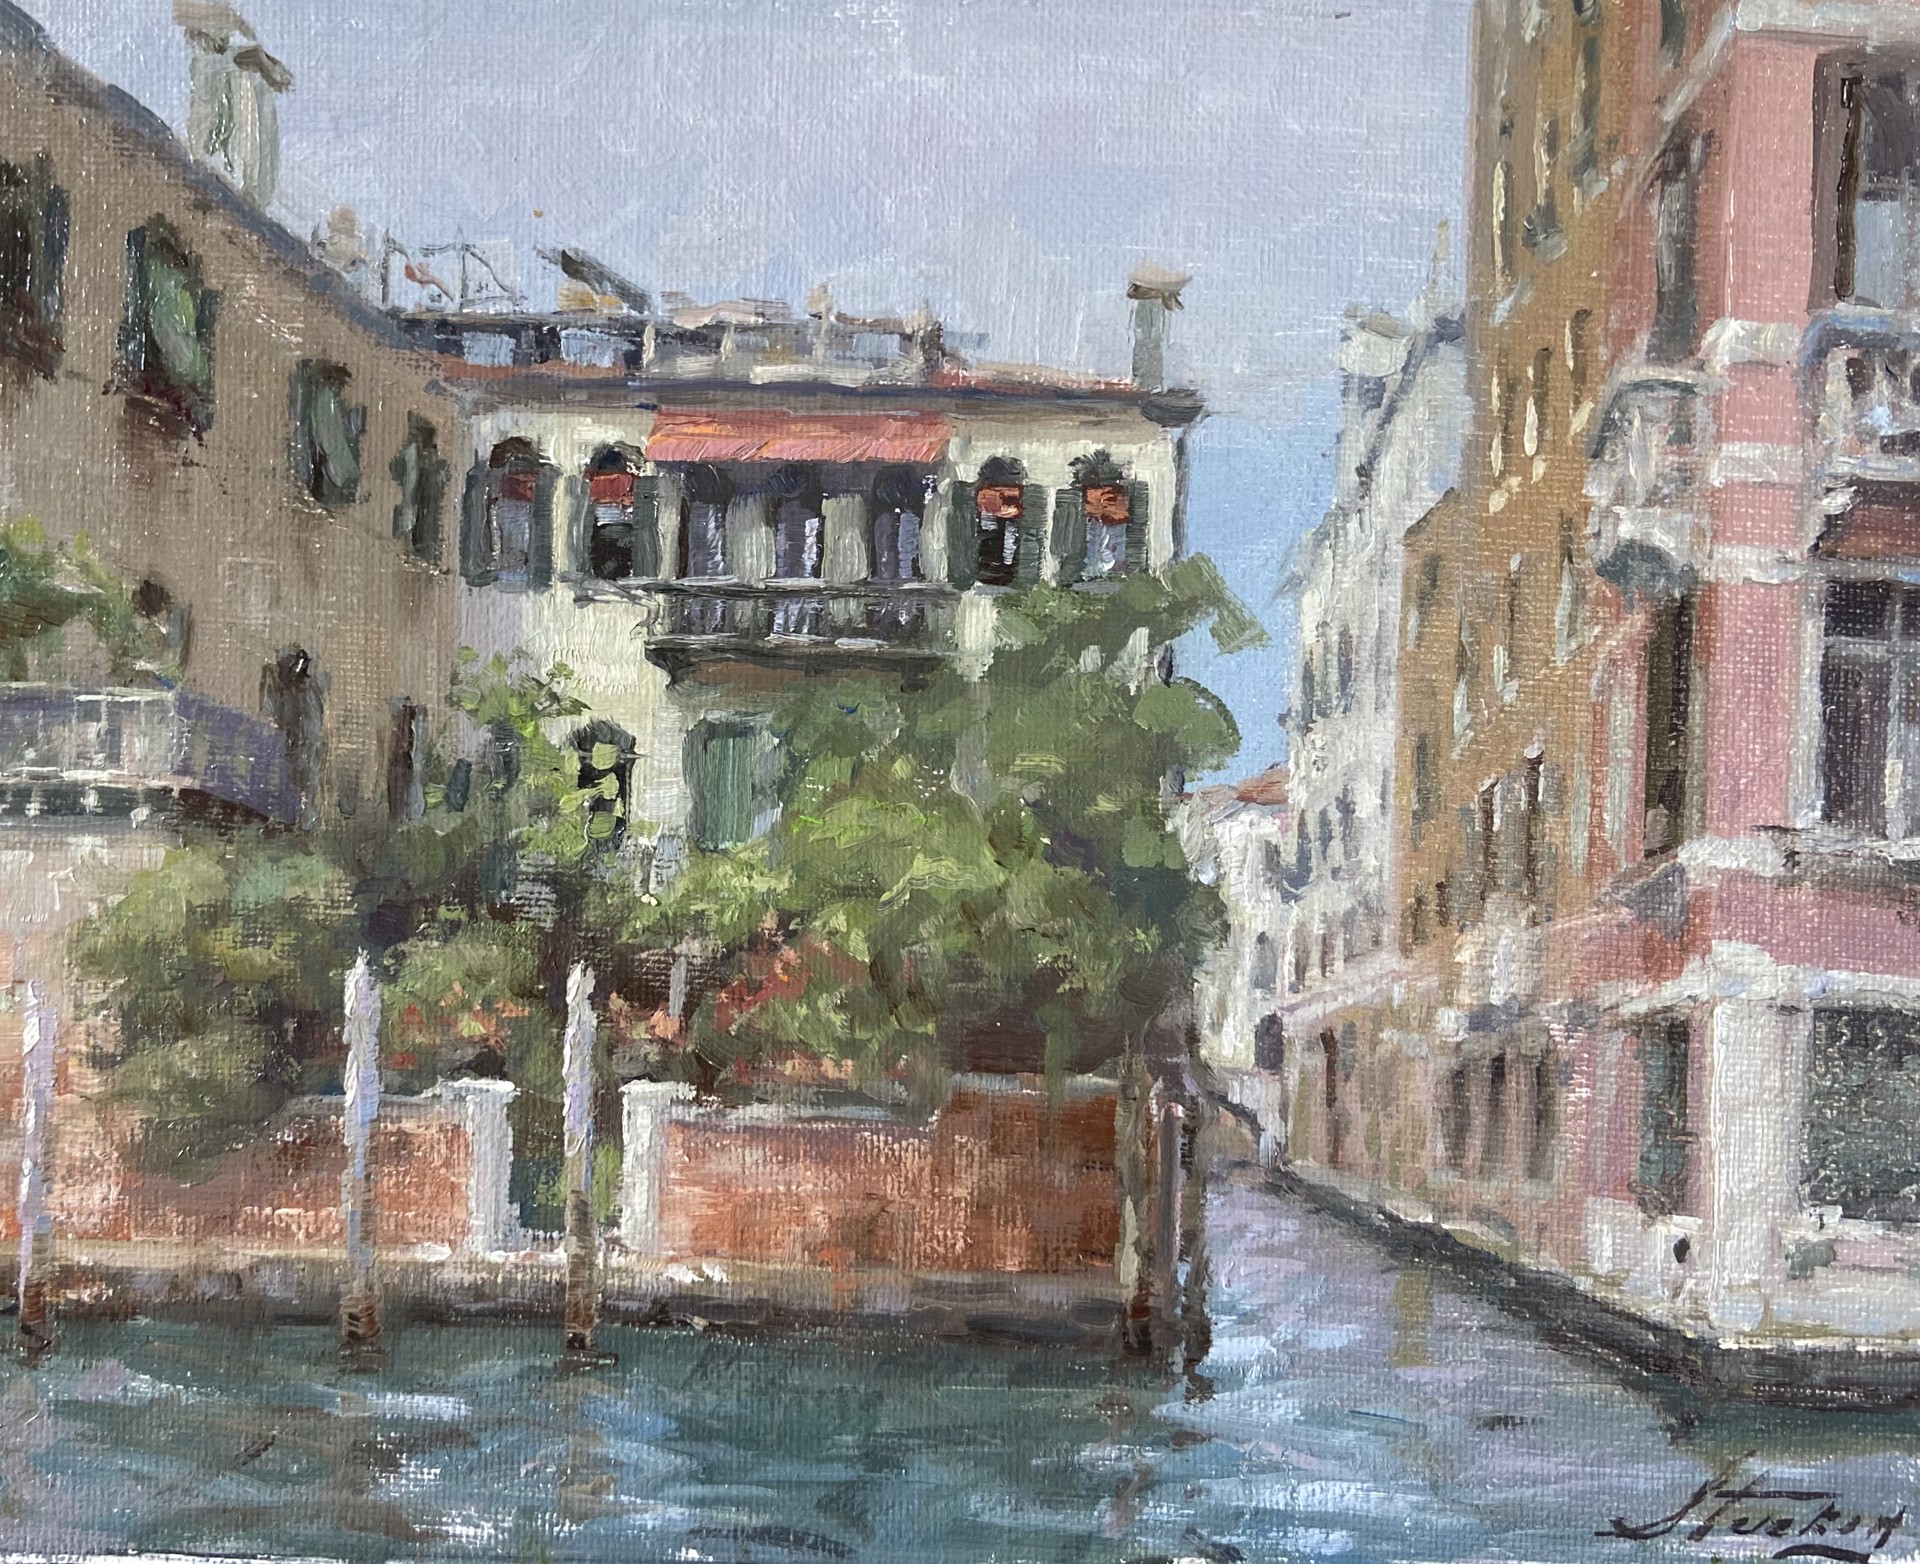 Exploring Venice by Kyle Stuckey